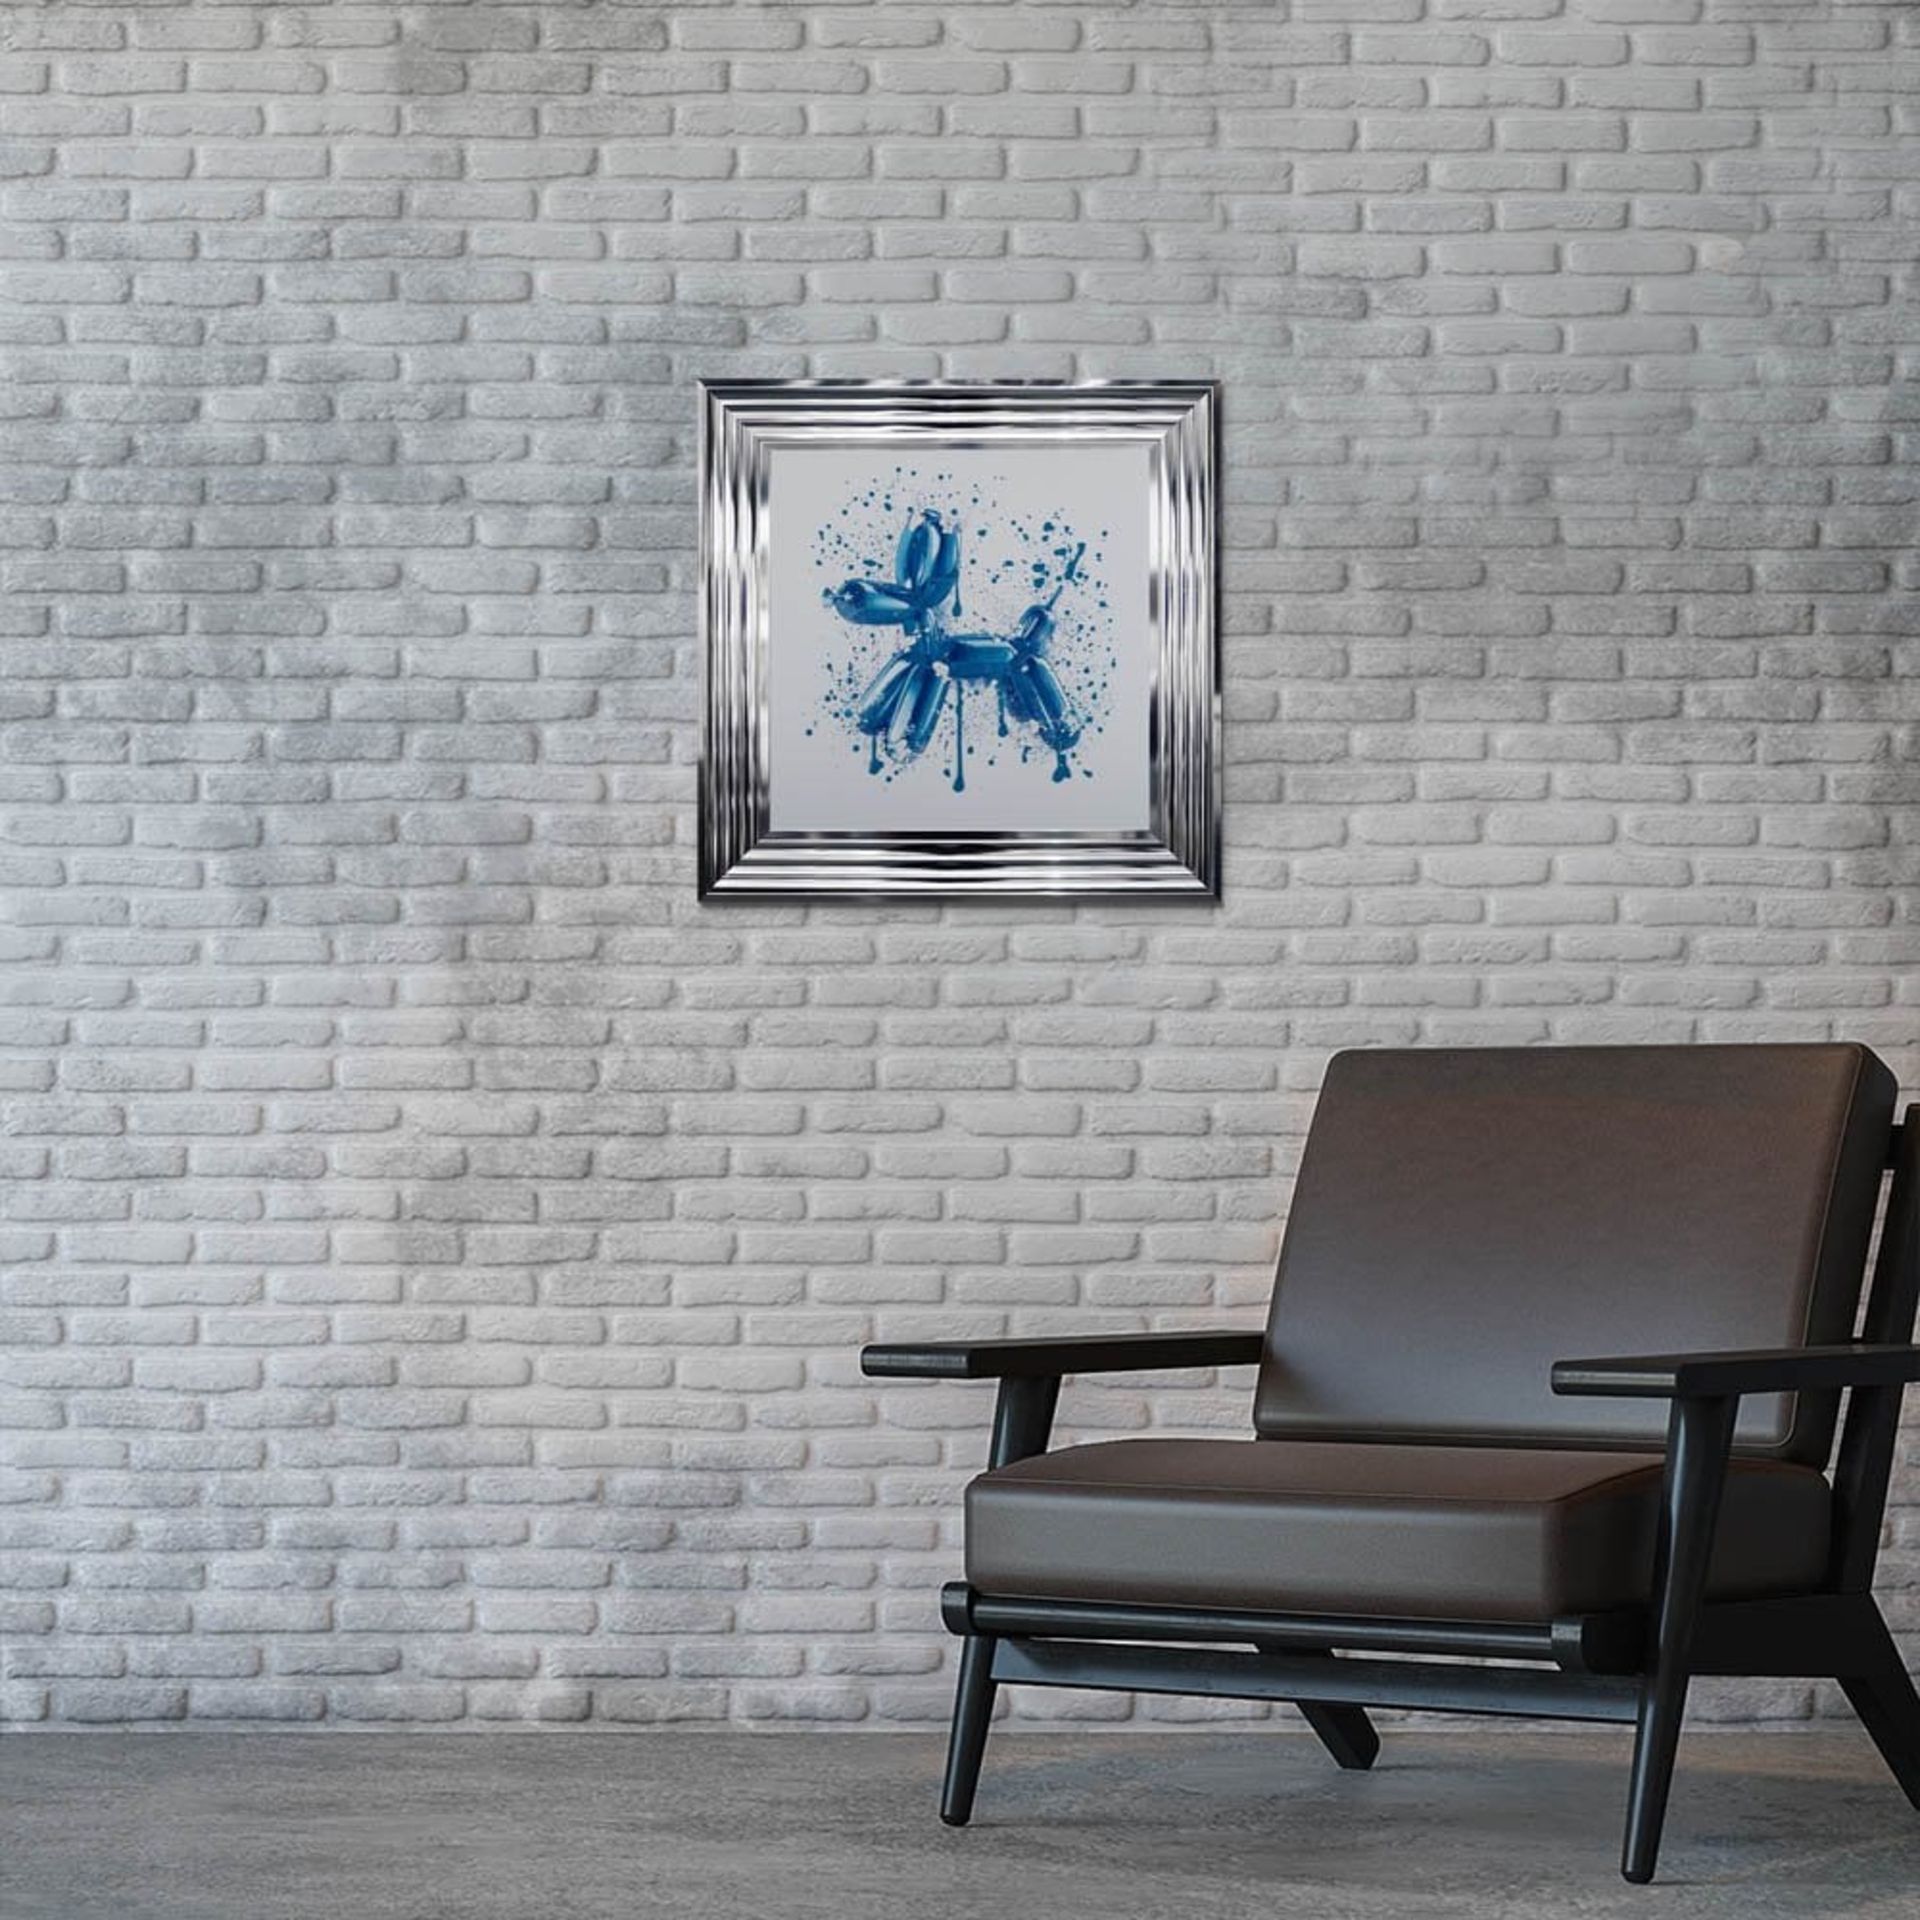 Jeff Koons Style Balloon Dog Blue Framed Wall Art - Image 2 of 4